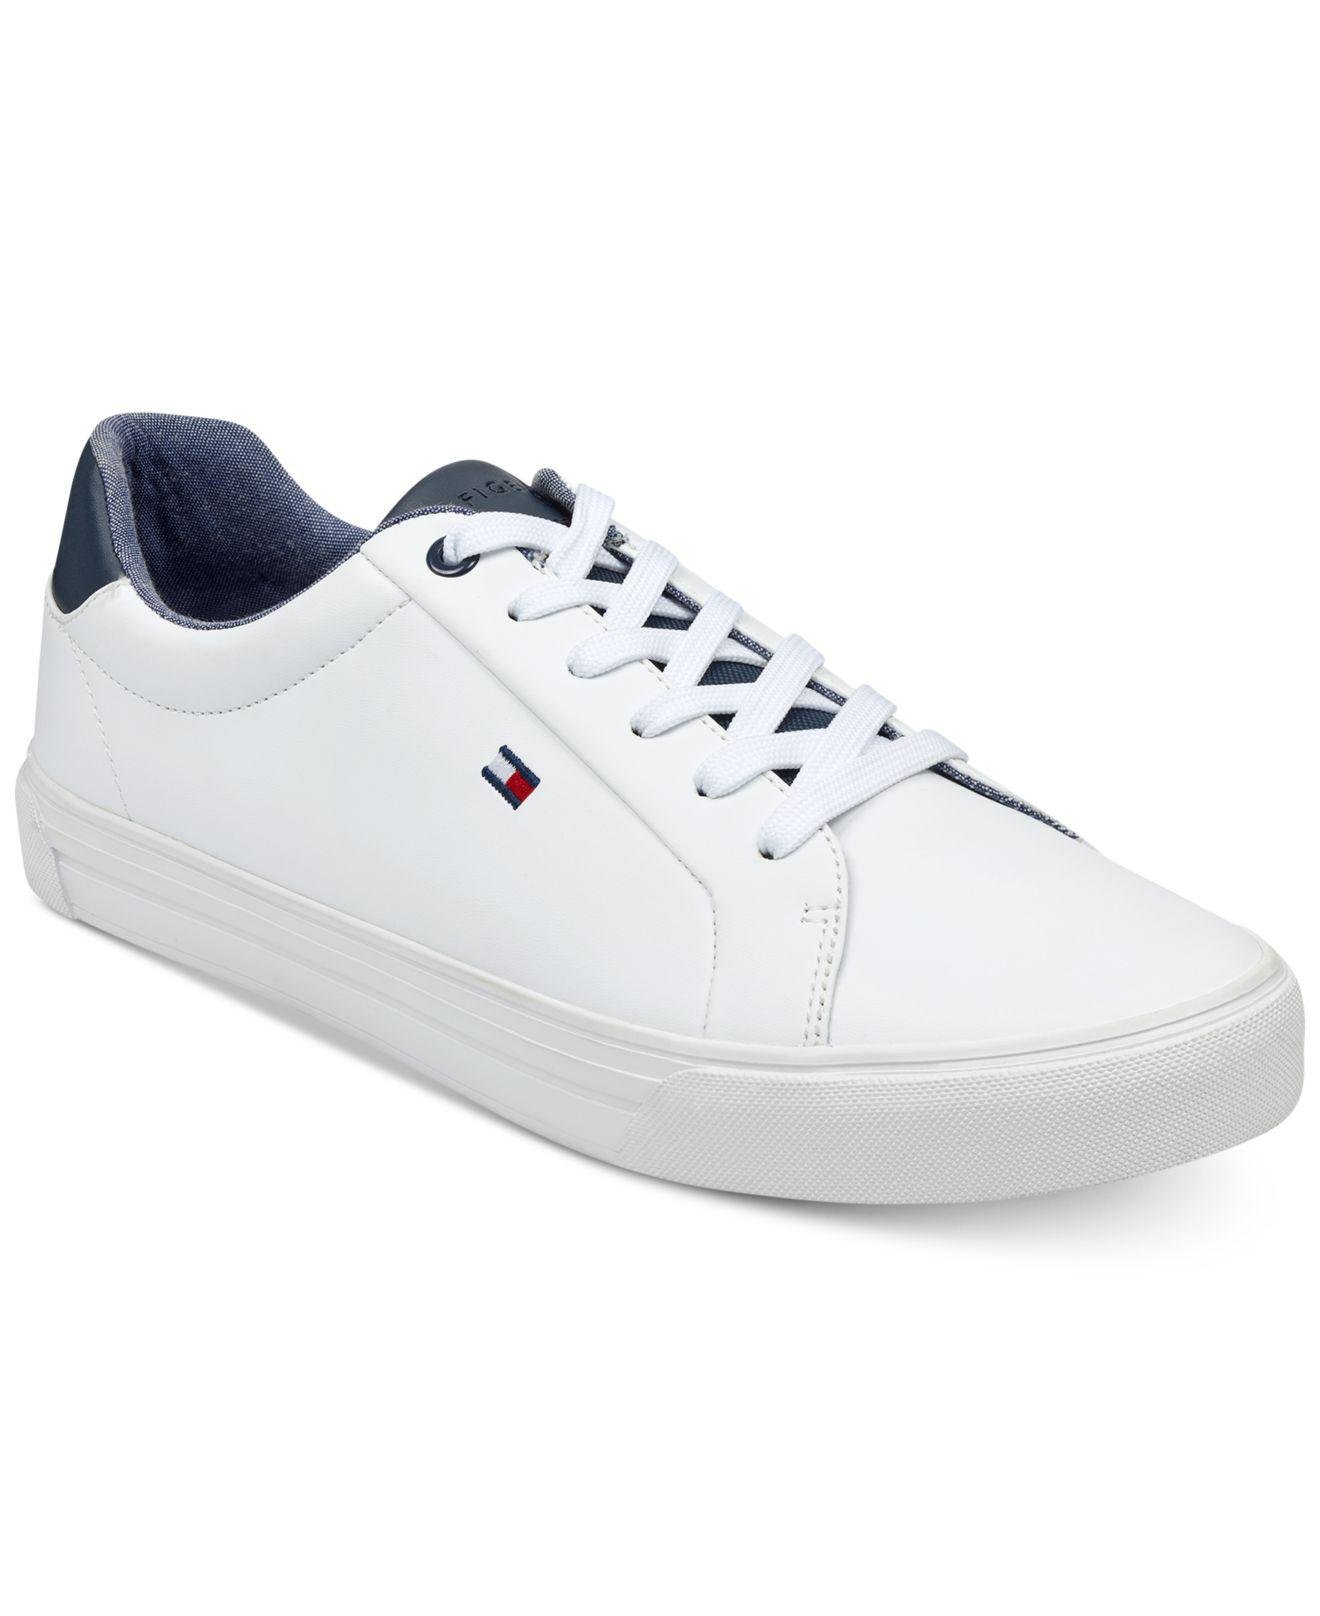 qqqwjf.tommy hilfiger white sneakers , Off 63%,shorin-ryu.net